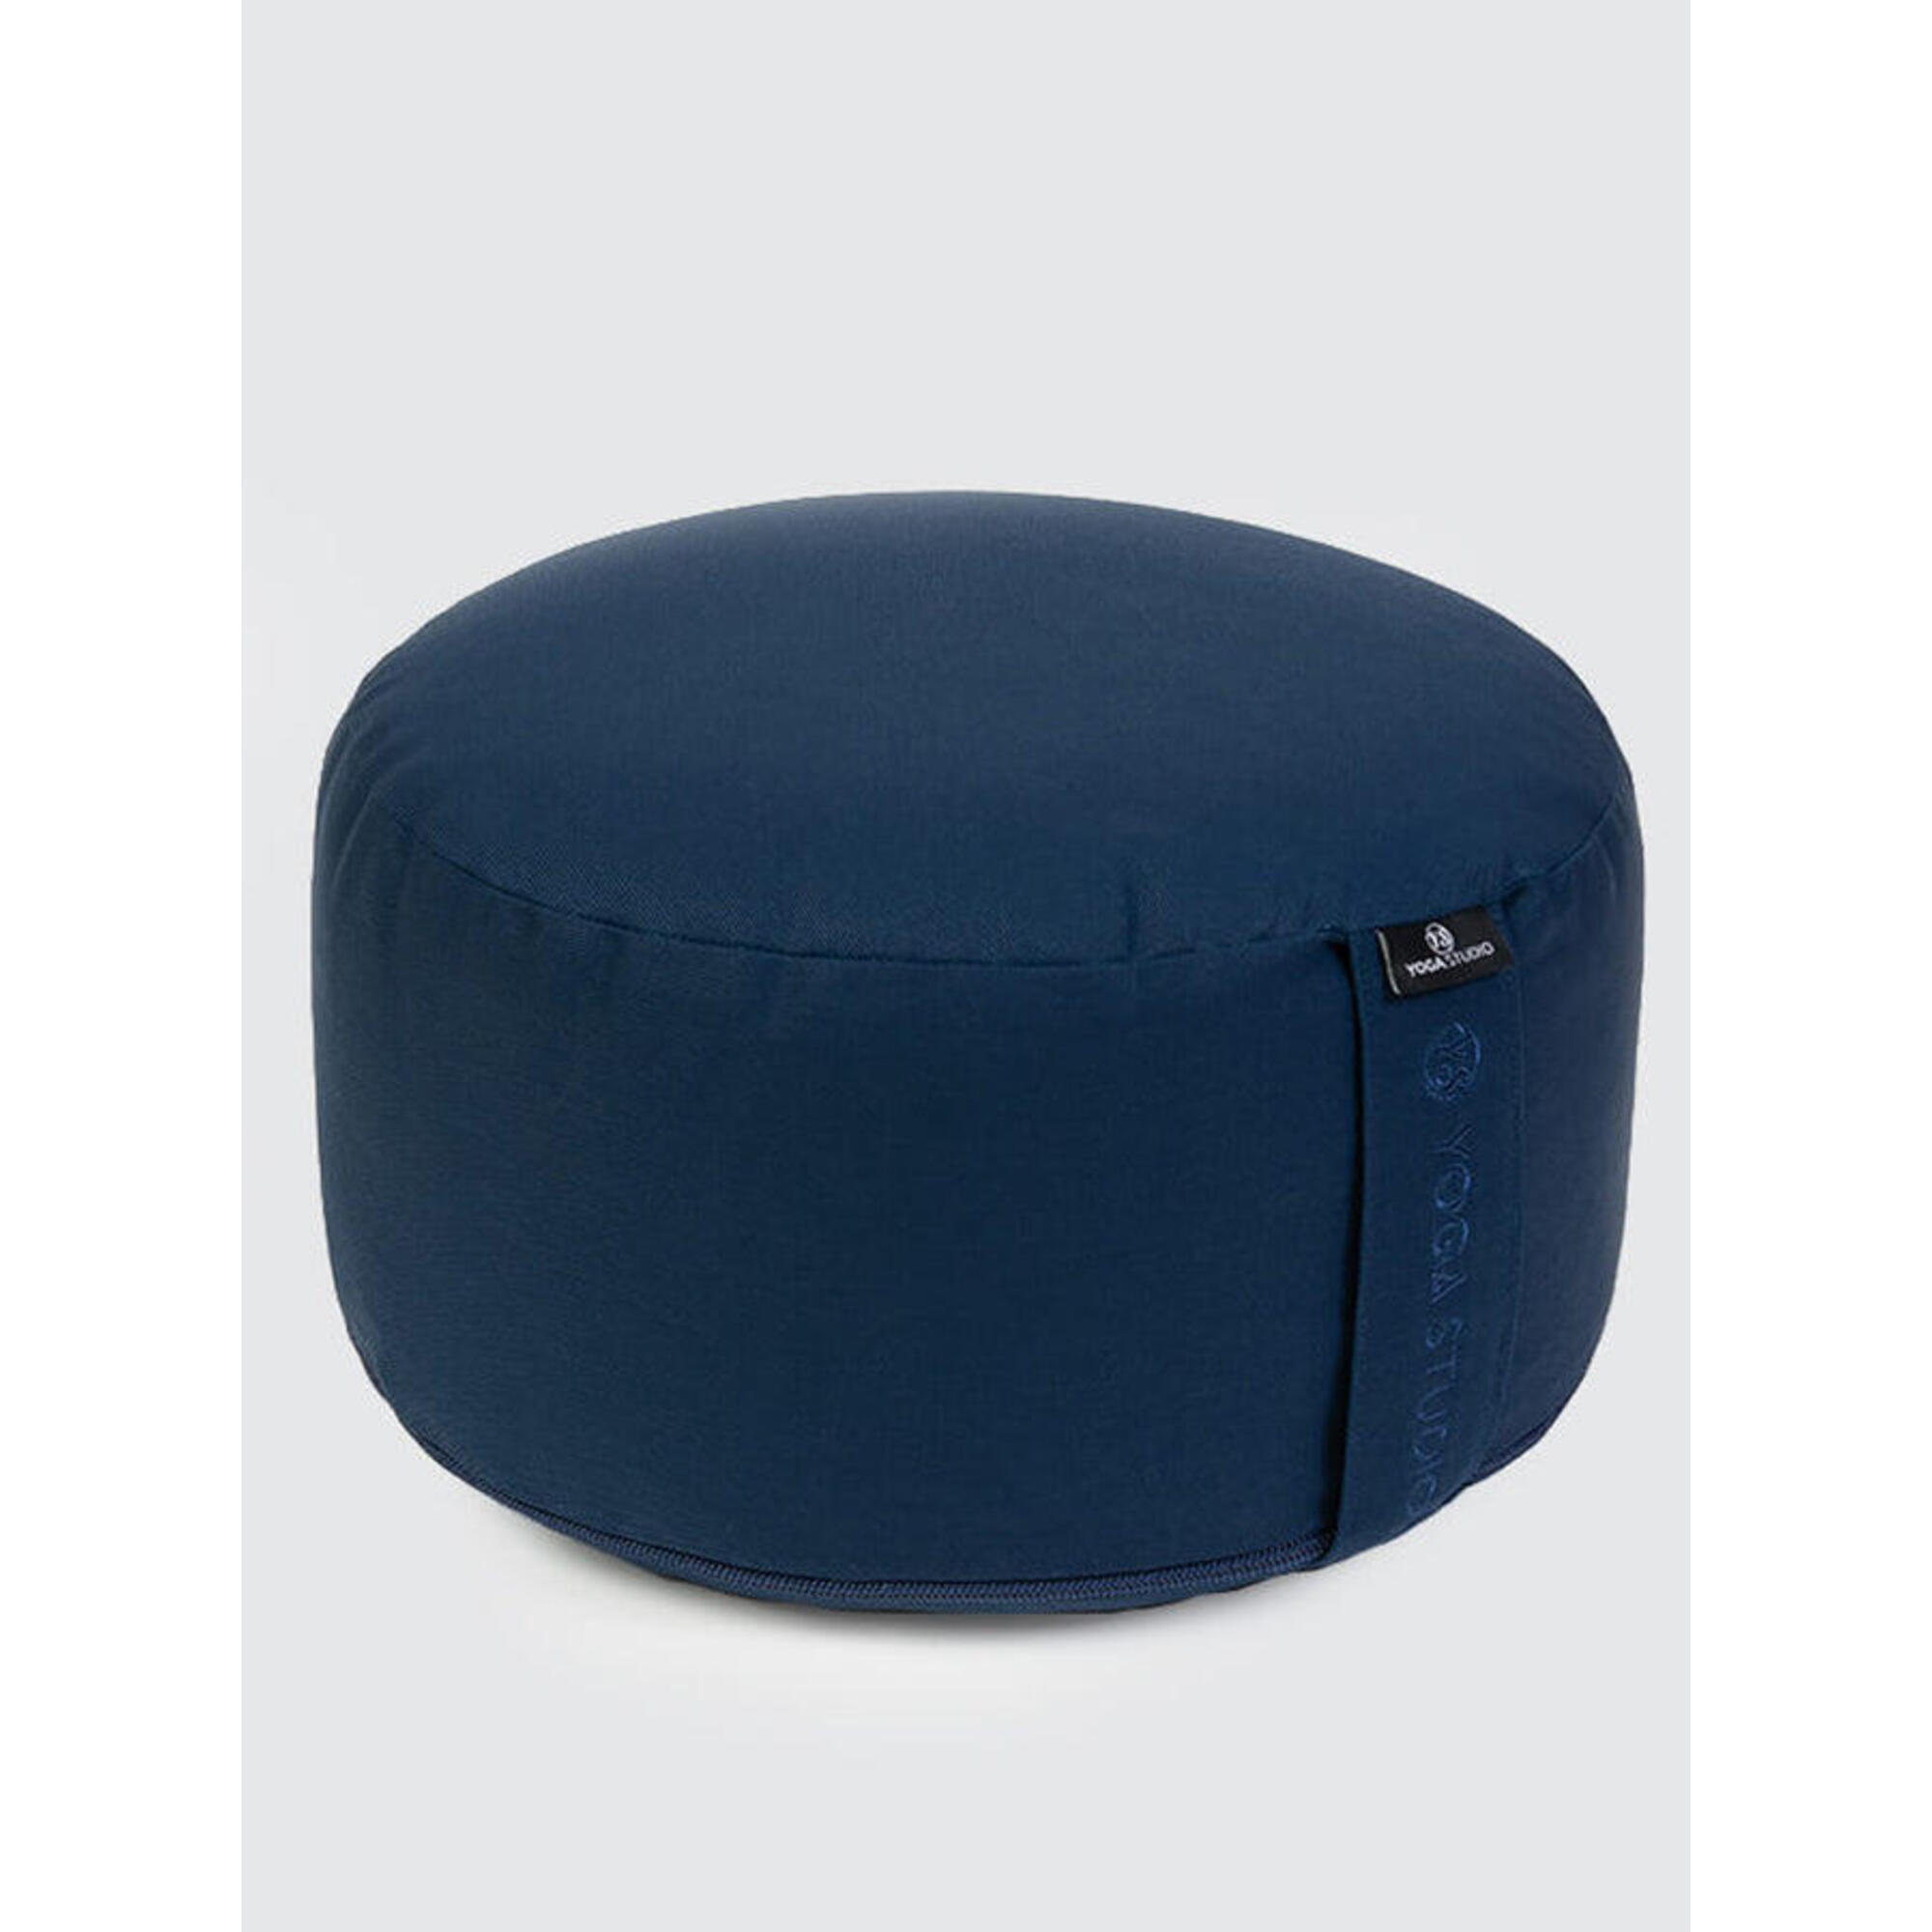 YOGA STUDIO Yoga Studio Cylinder Meditation Cushion - Navy Blue